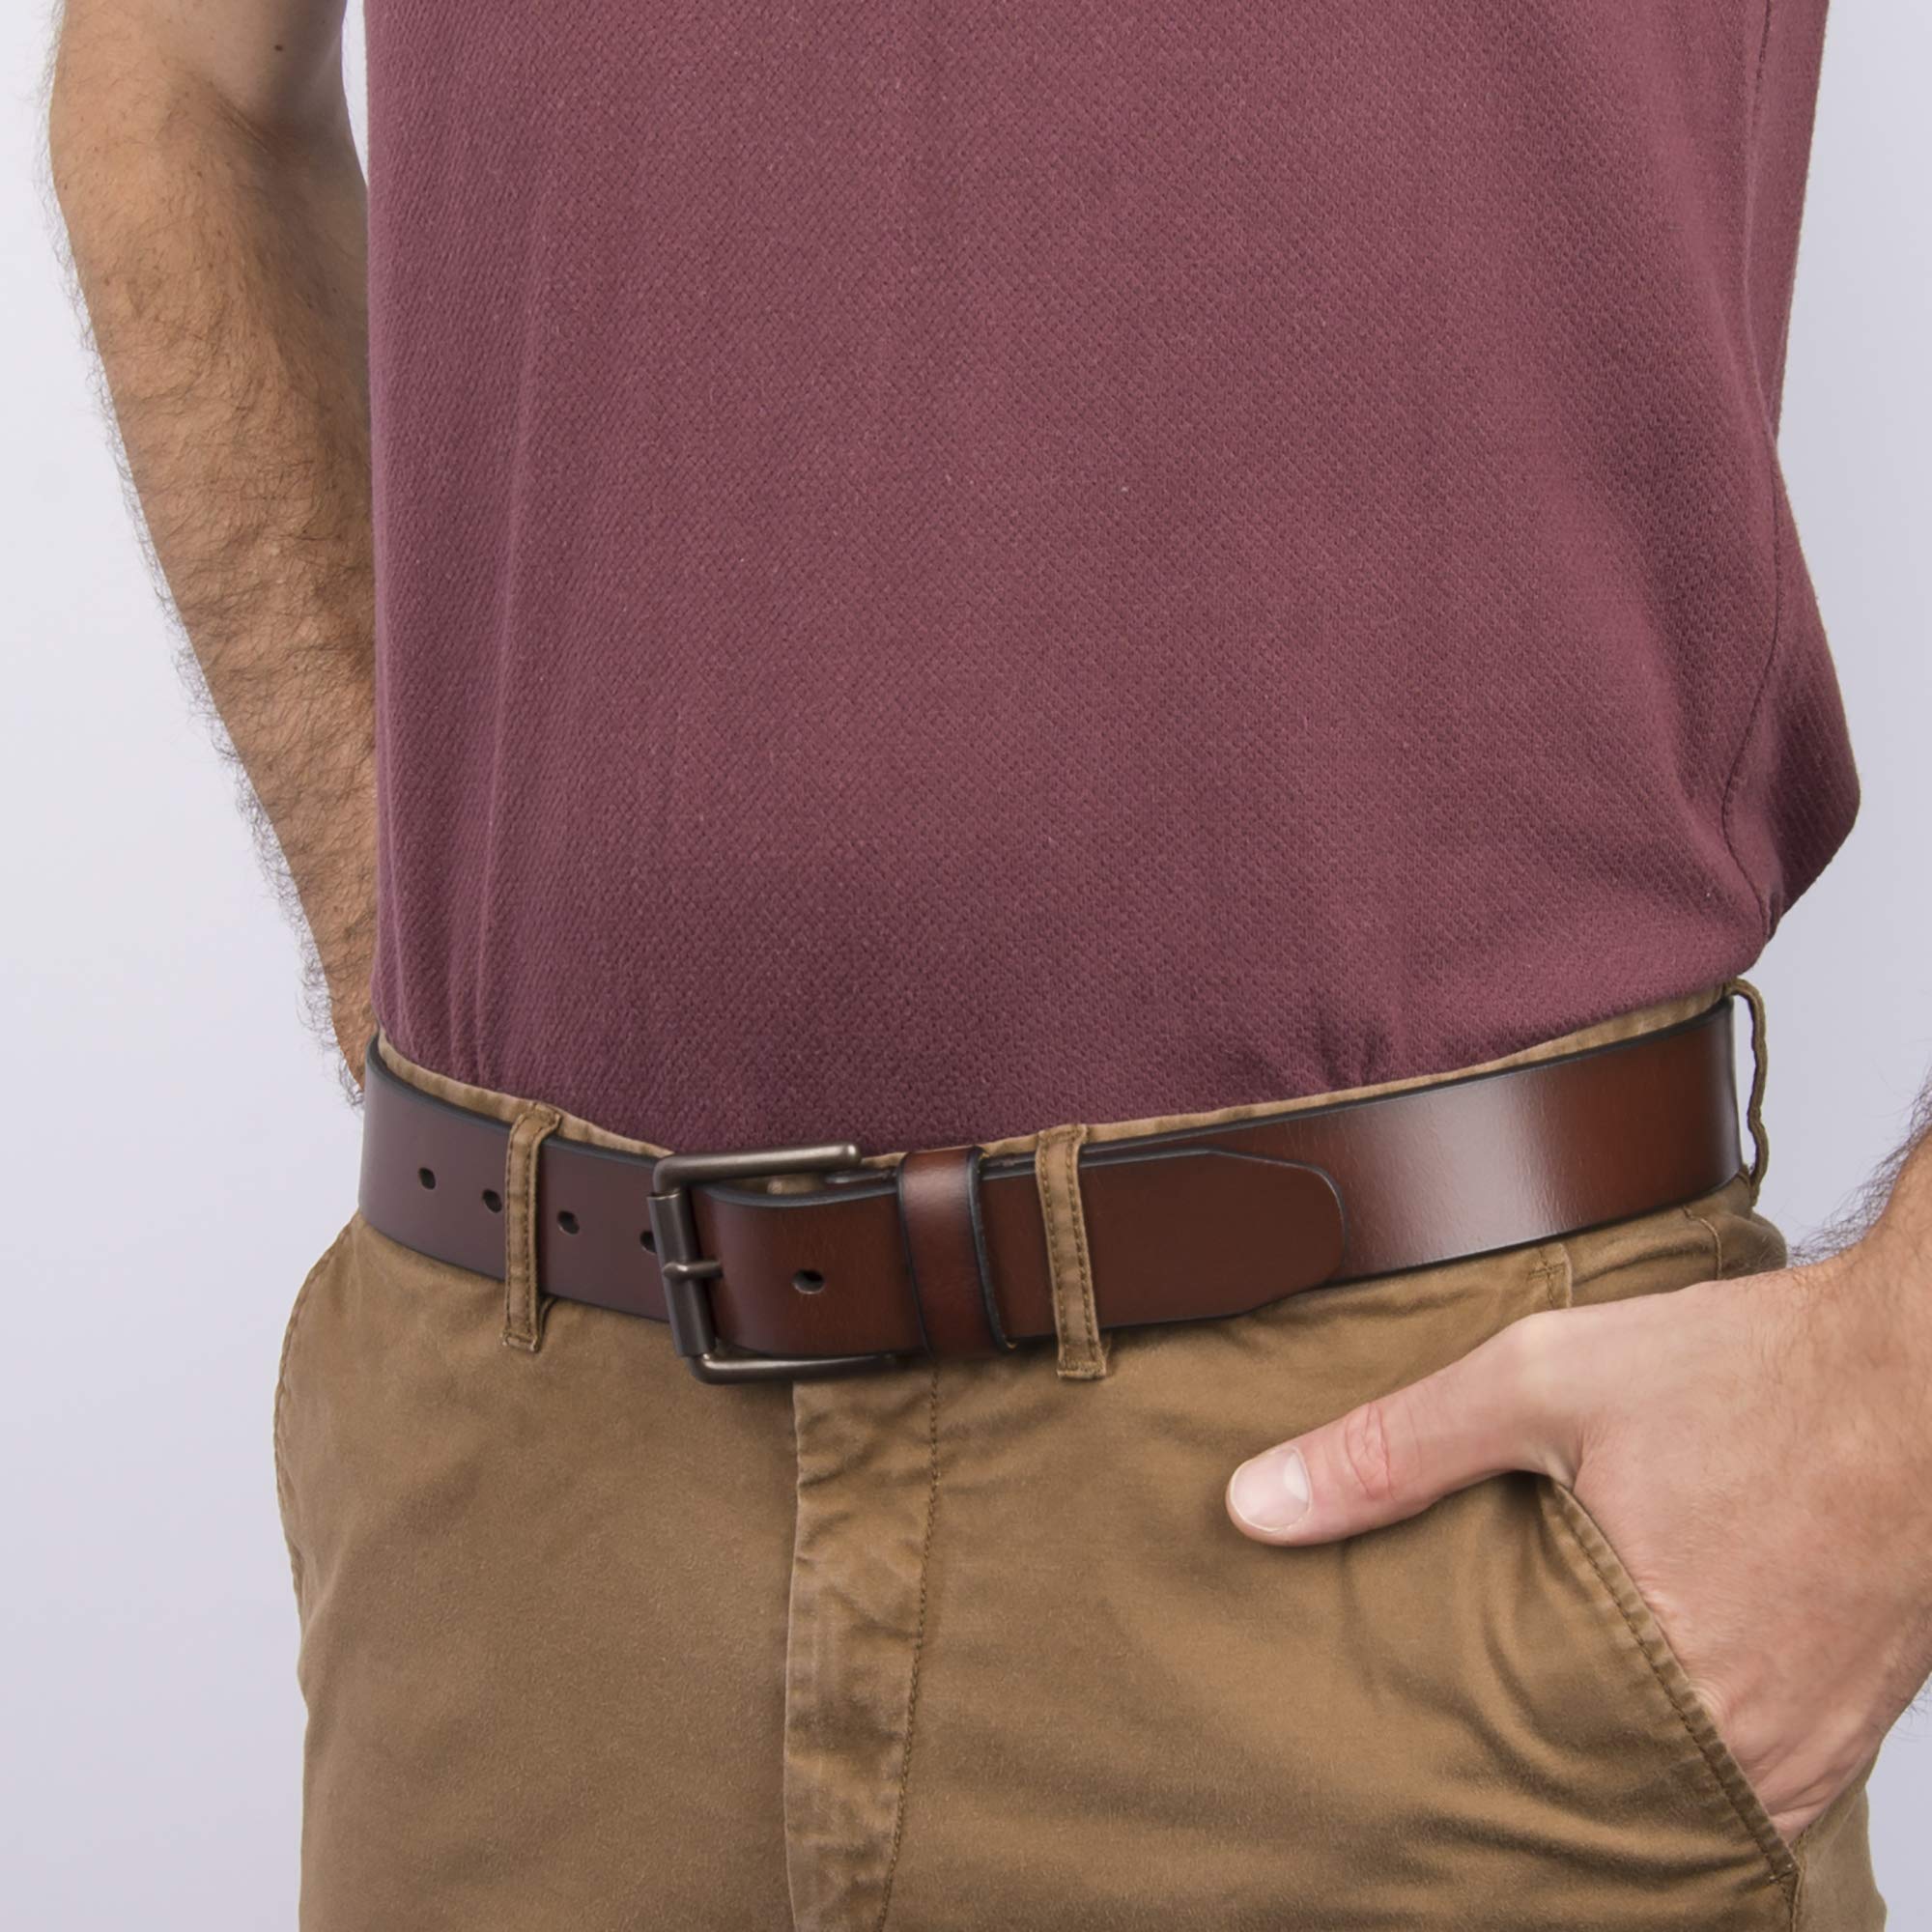 Dockers Men's Leather Casual Belt